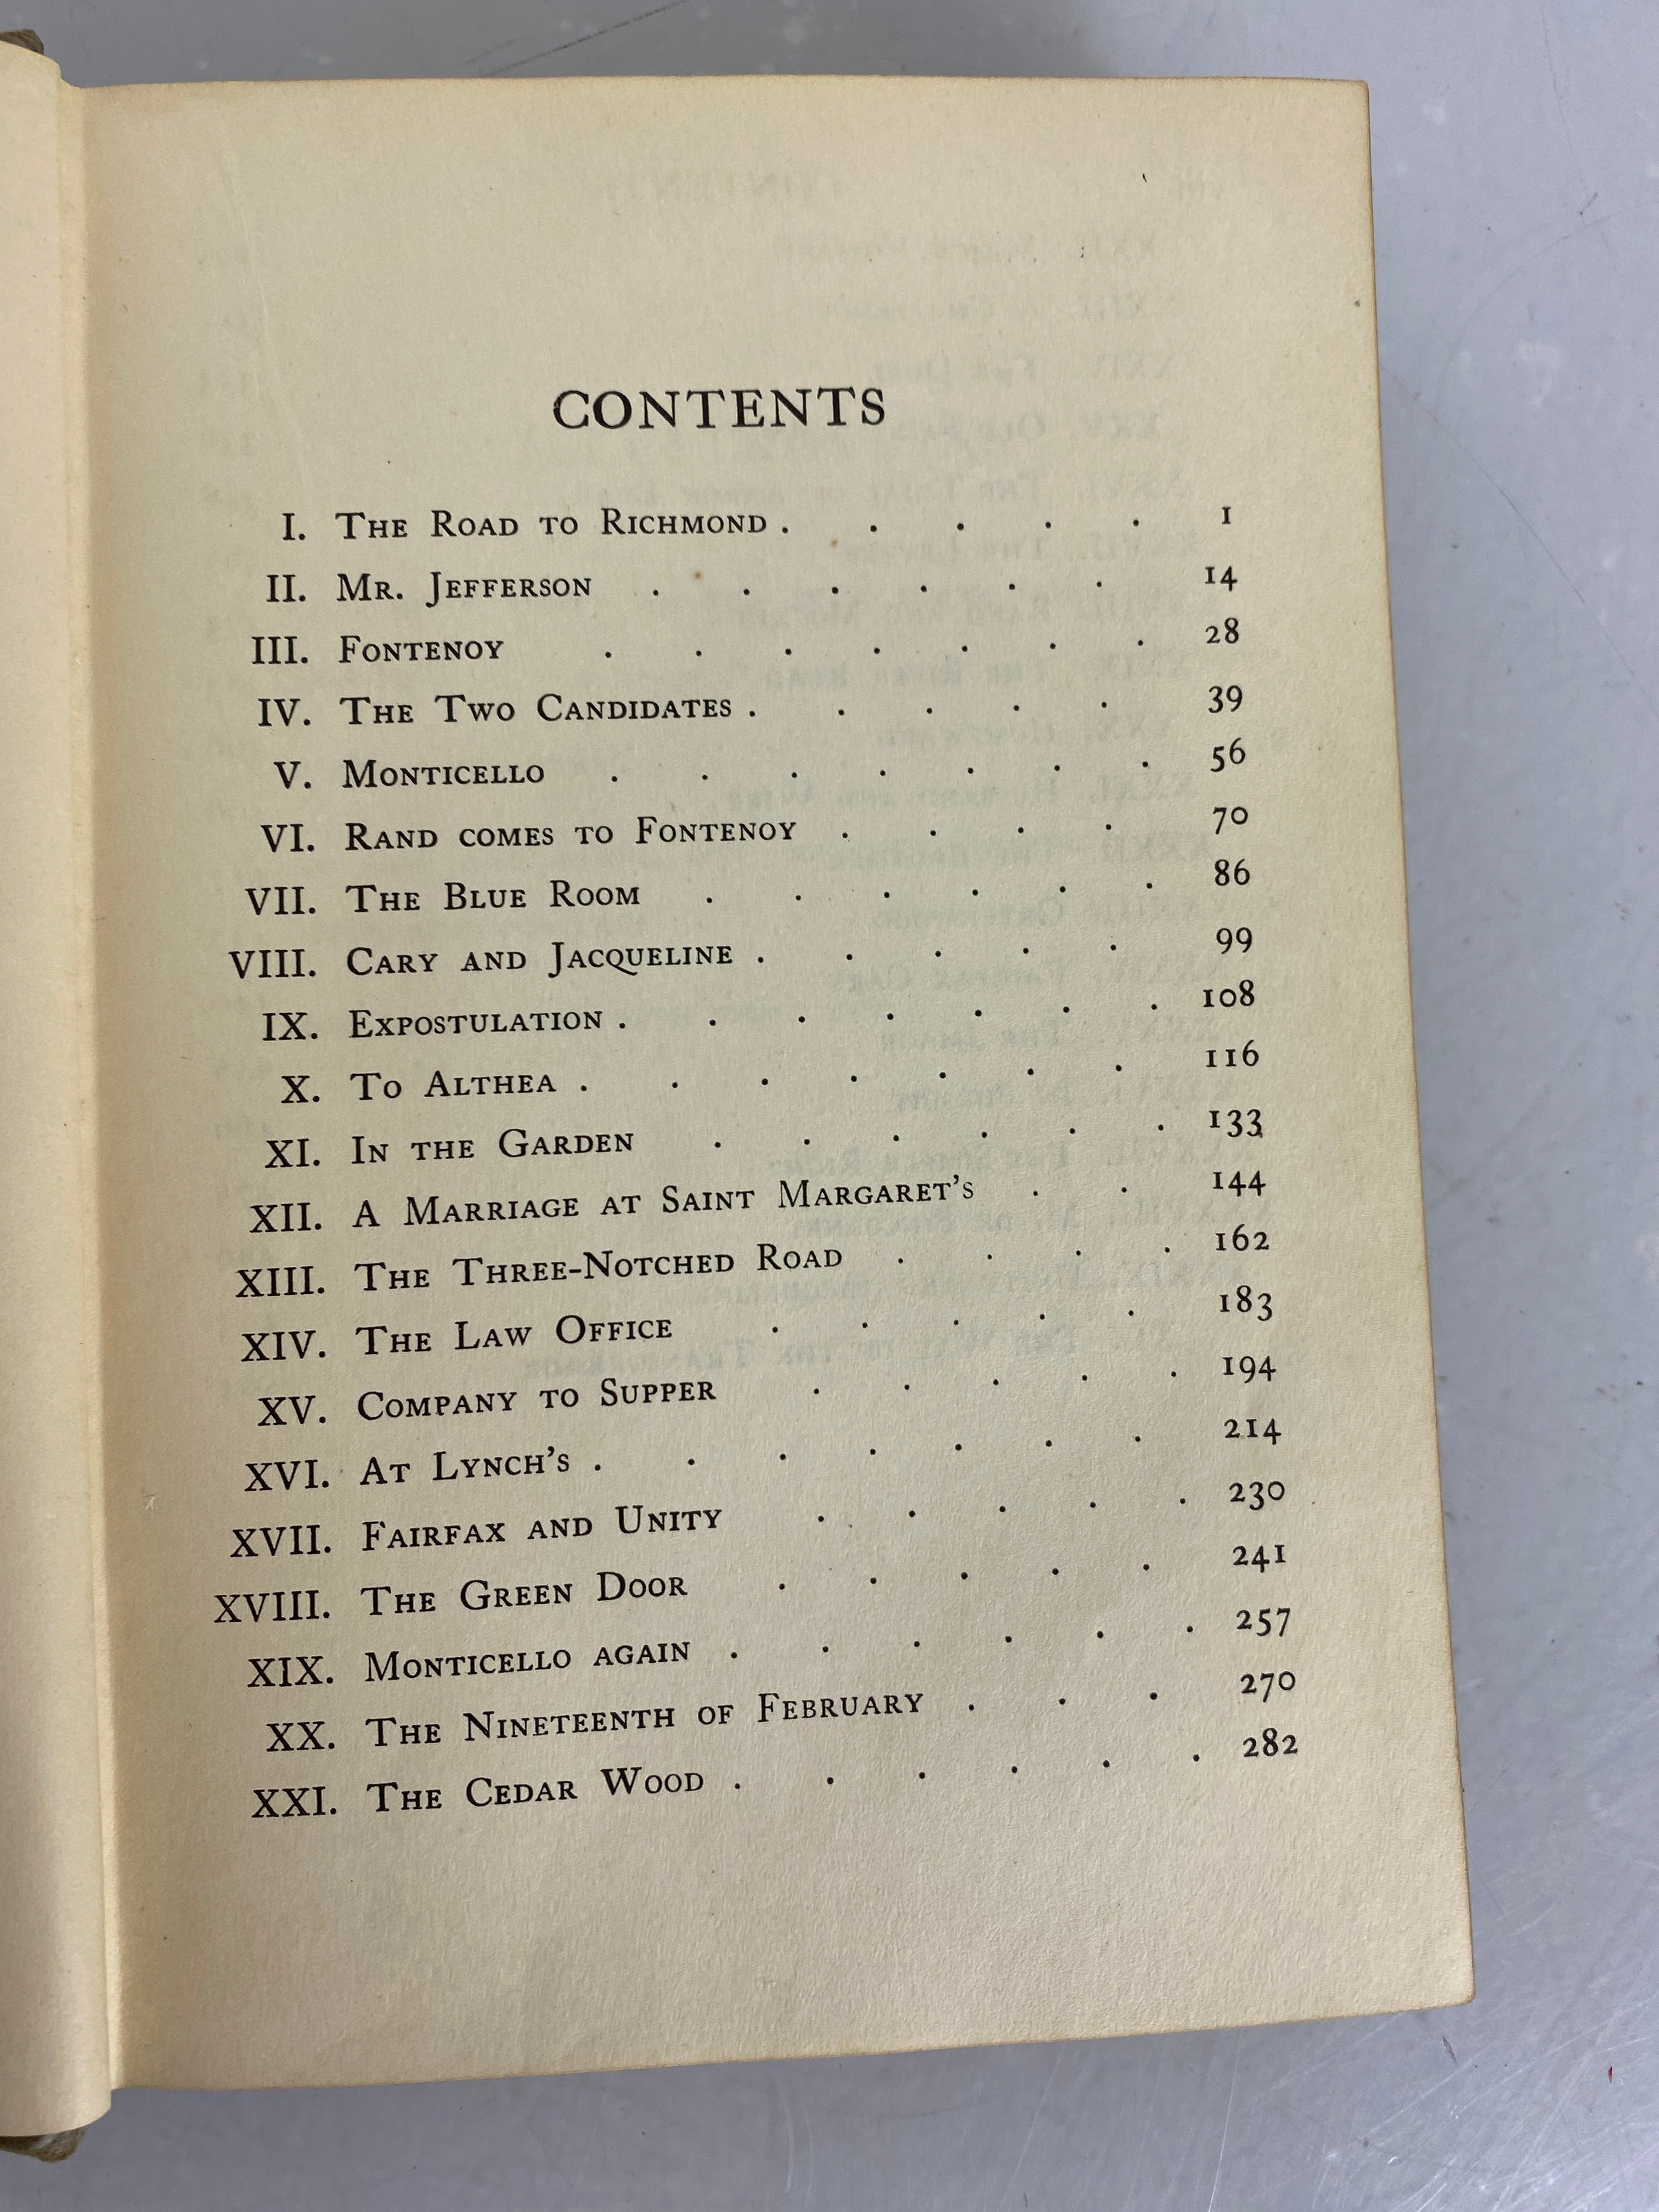 Lot of 2 Novels: The Calling of Dan Matthews 1909 and Lewis Rand 1908 HC